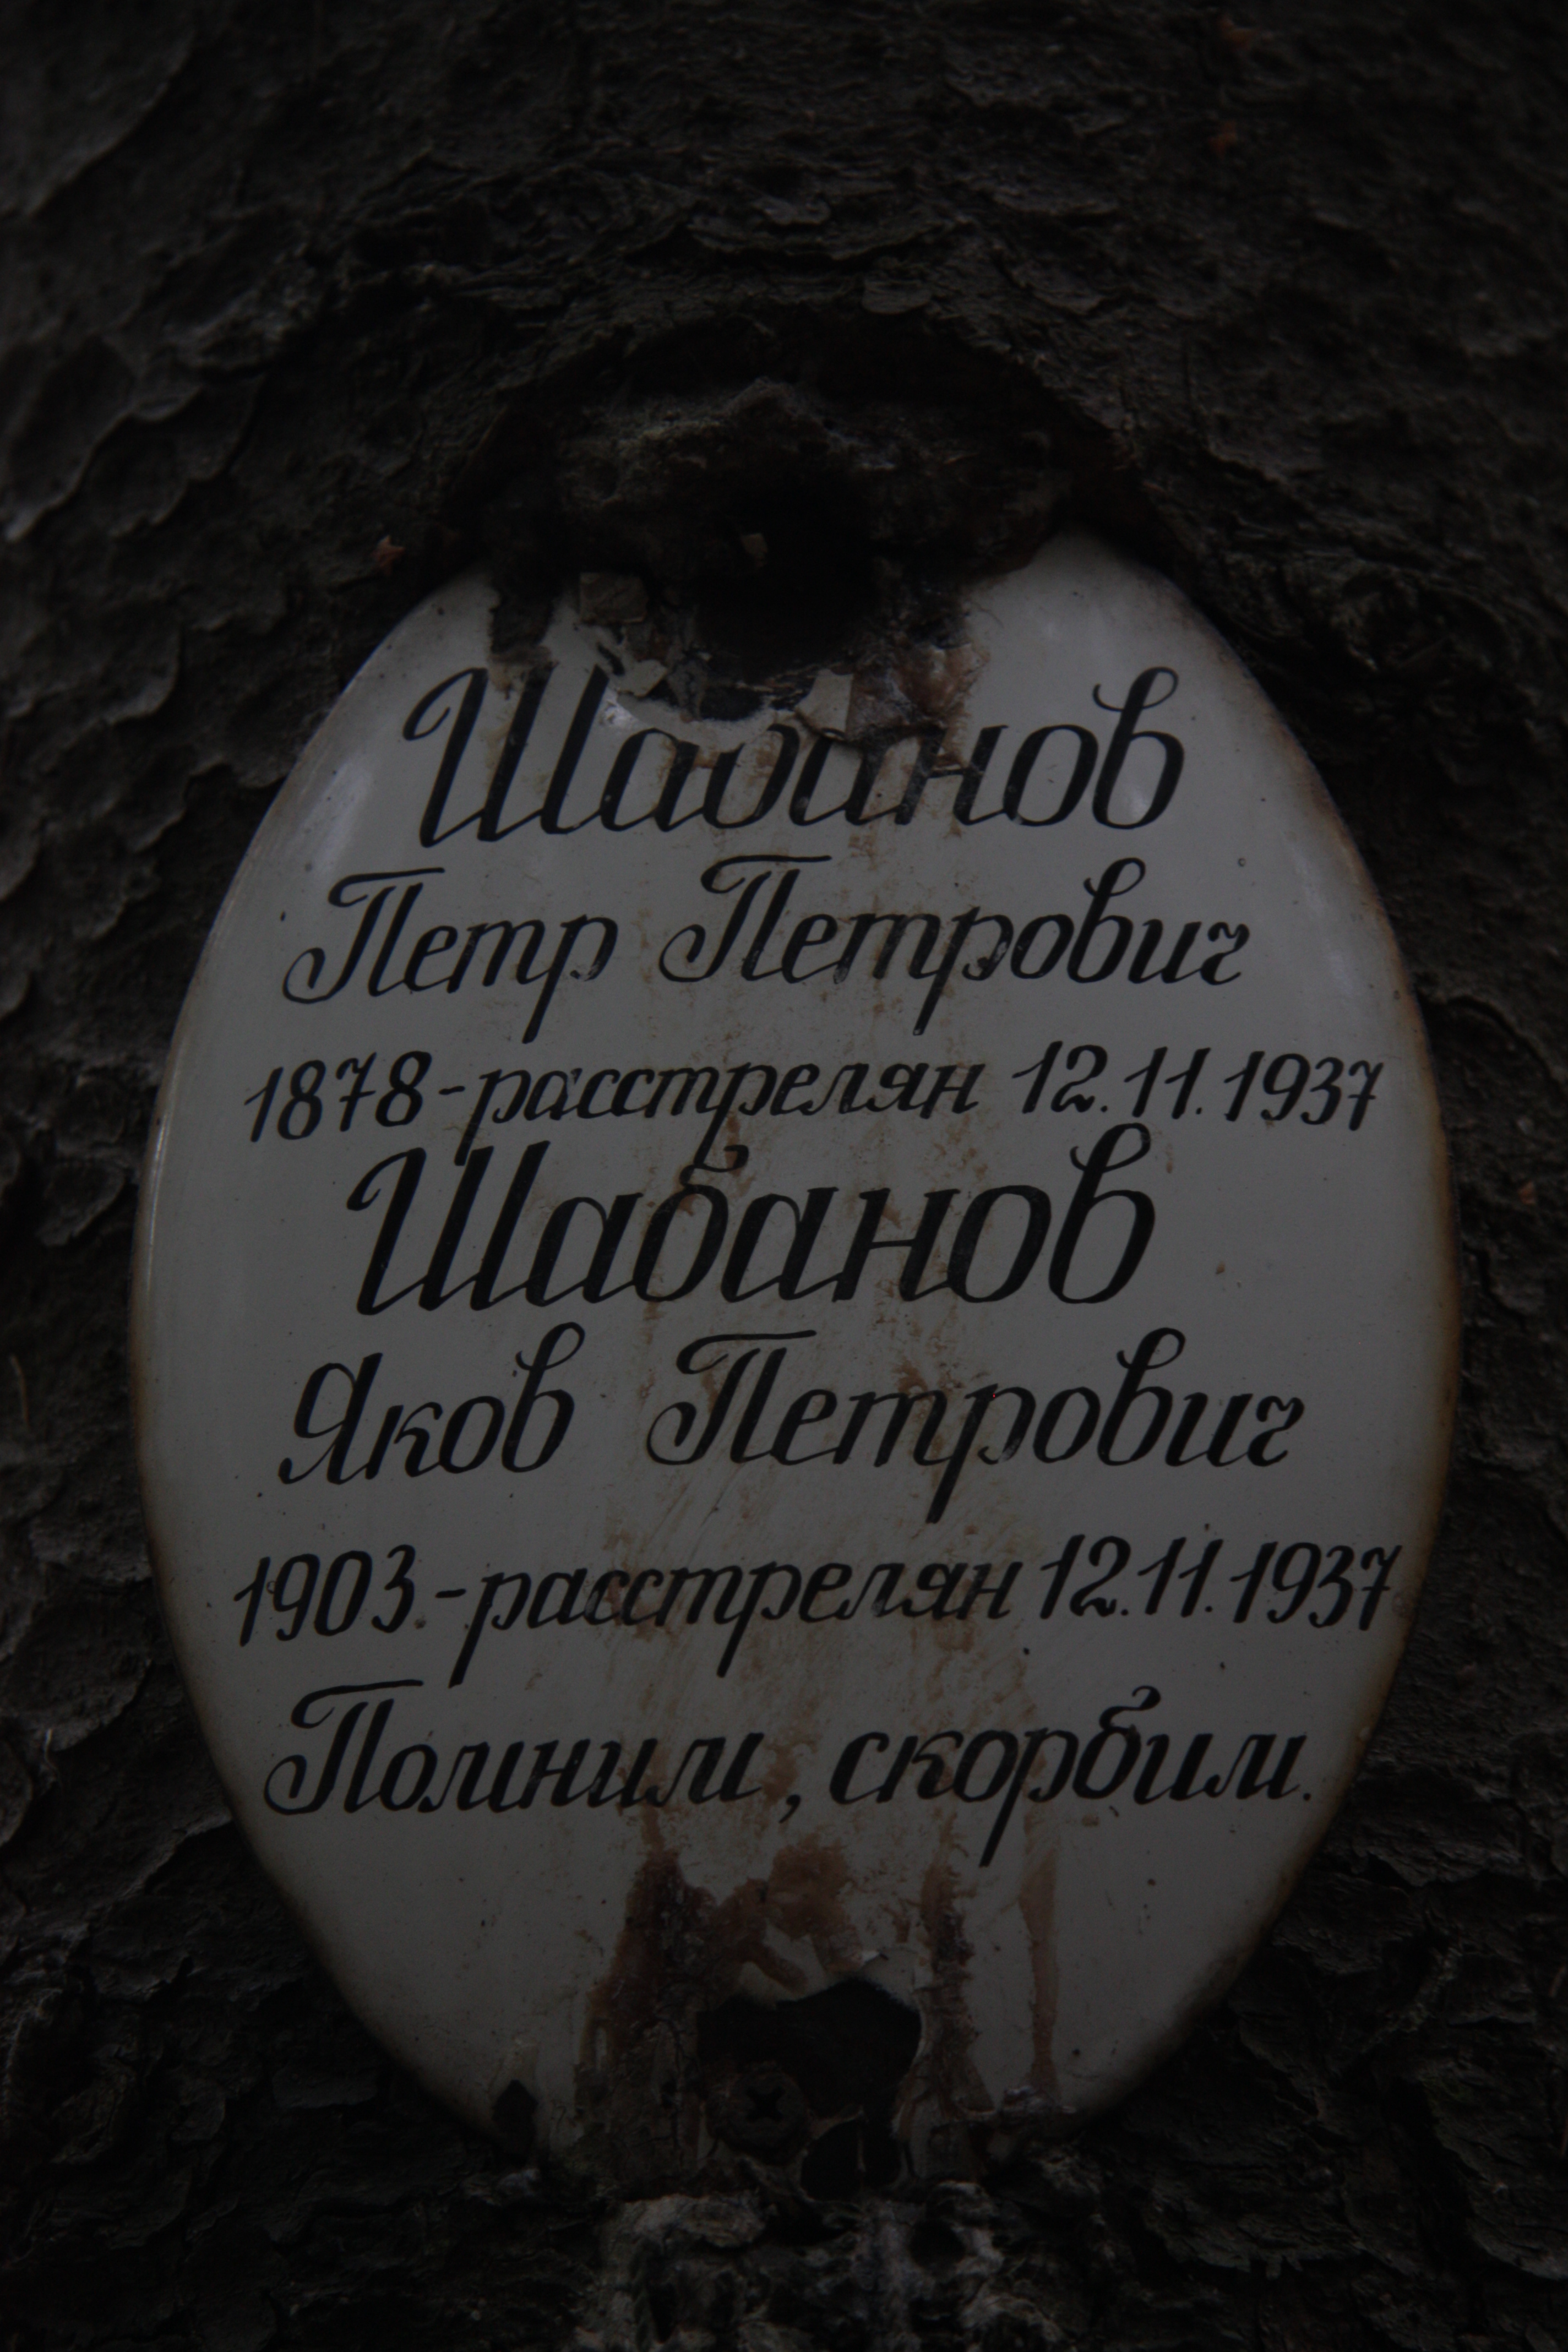 Памятная табличка П. П. и Я. П. Шабановым. Фото 18.05.2017